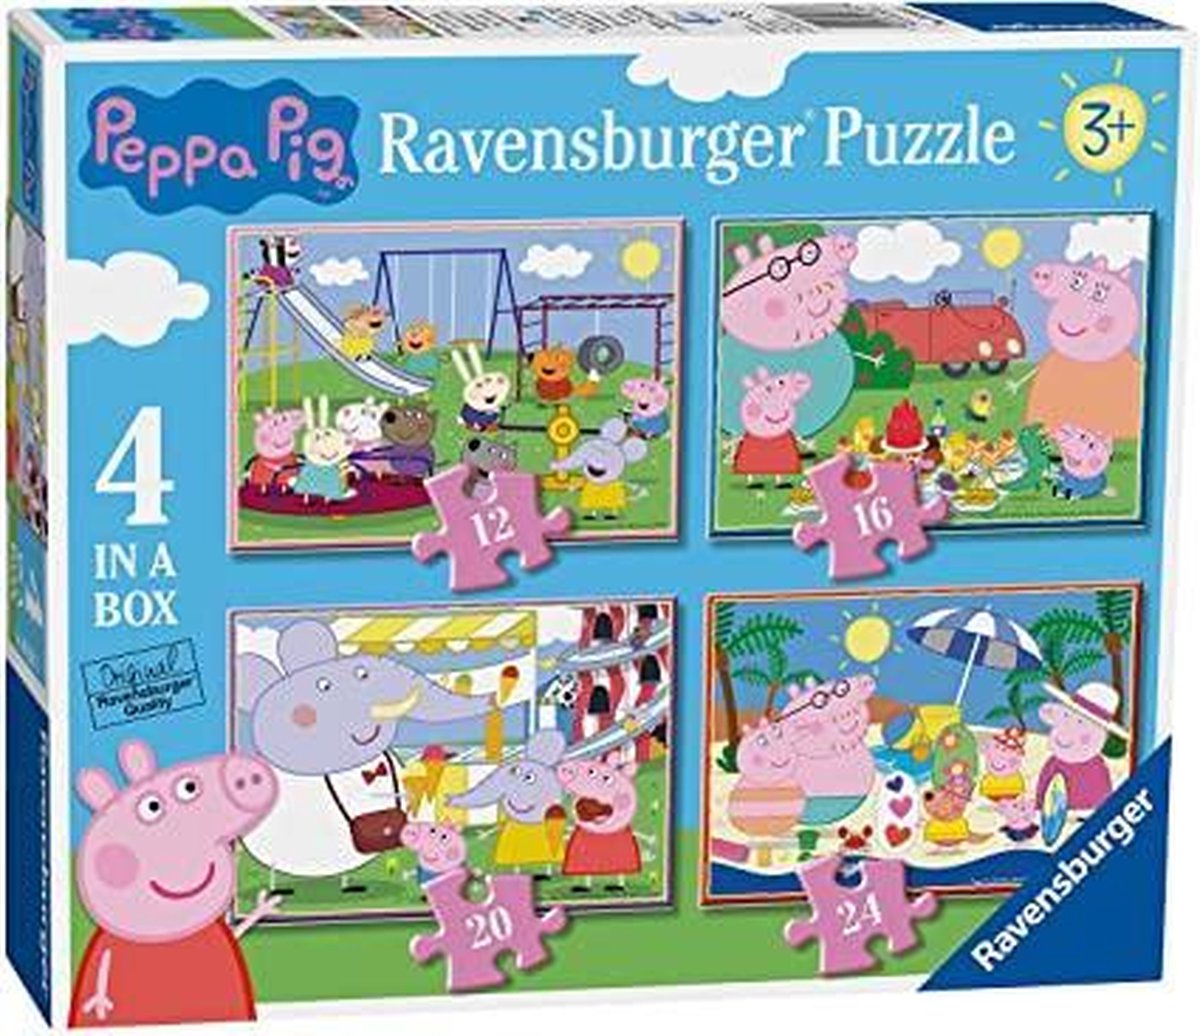 Ravensburger Peppa Pig 4 in a Box Jigsaw Puzzles